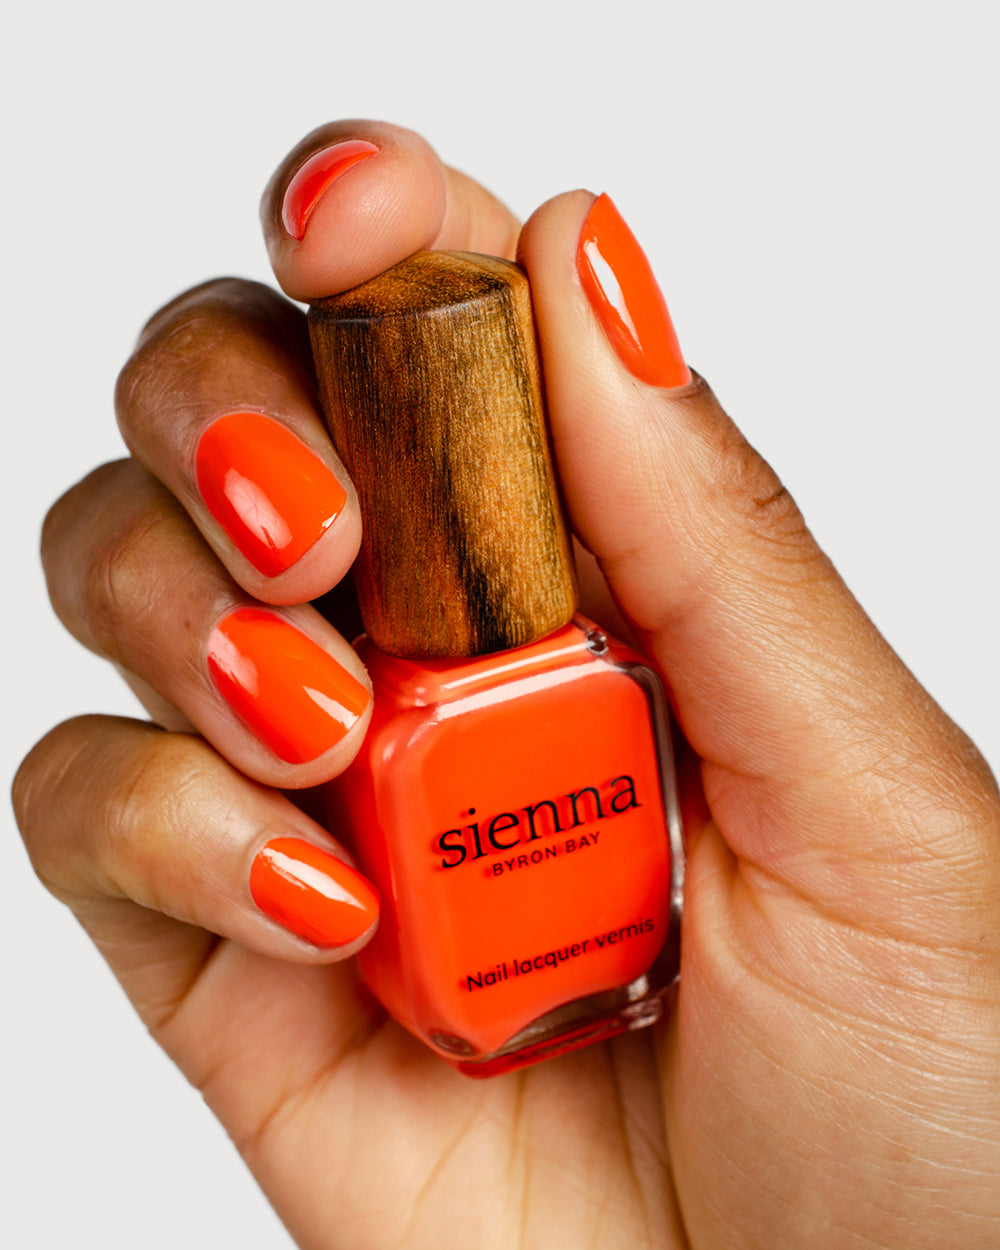 Tangerine nail polish hand swatch on medium skin tone holding sienna bottle